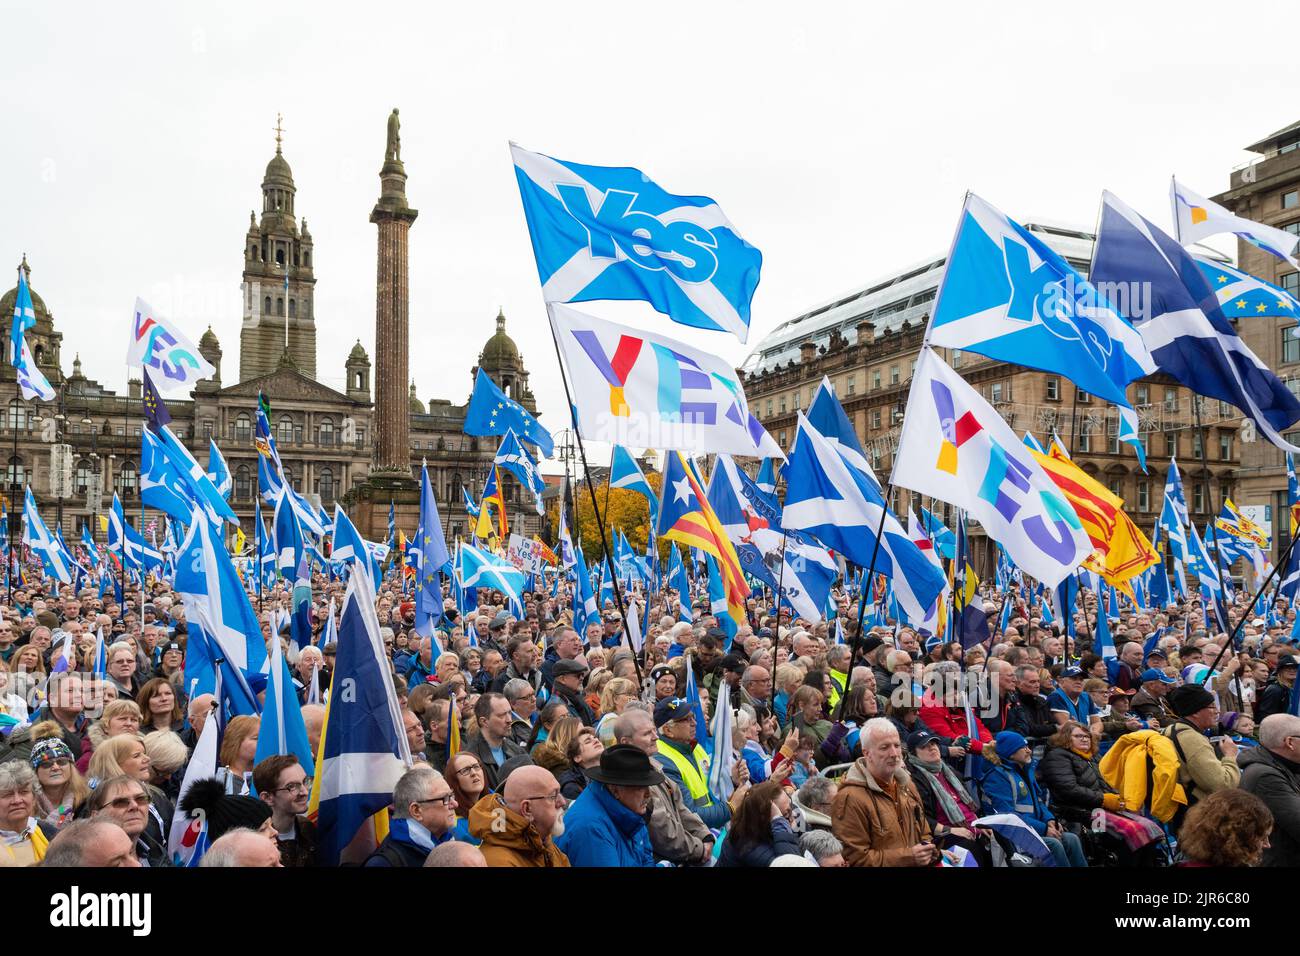 Scottish Independence - Independence Rally indyref 2020 à George Square, Glasgow Écosse 2 novembre 2019 Banque D'Images